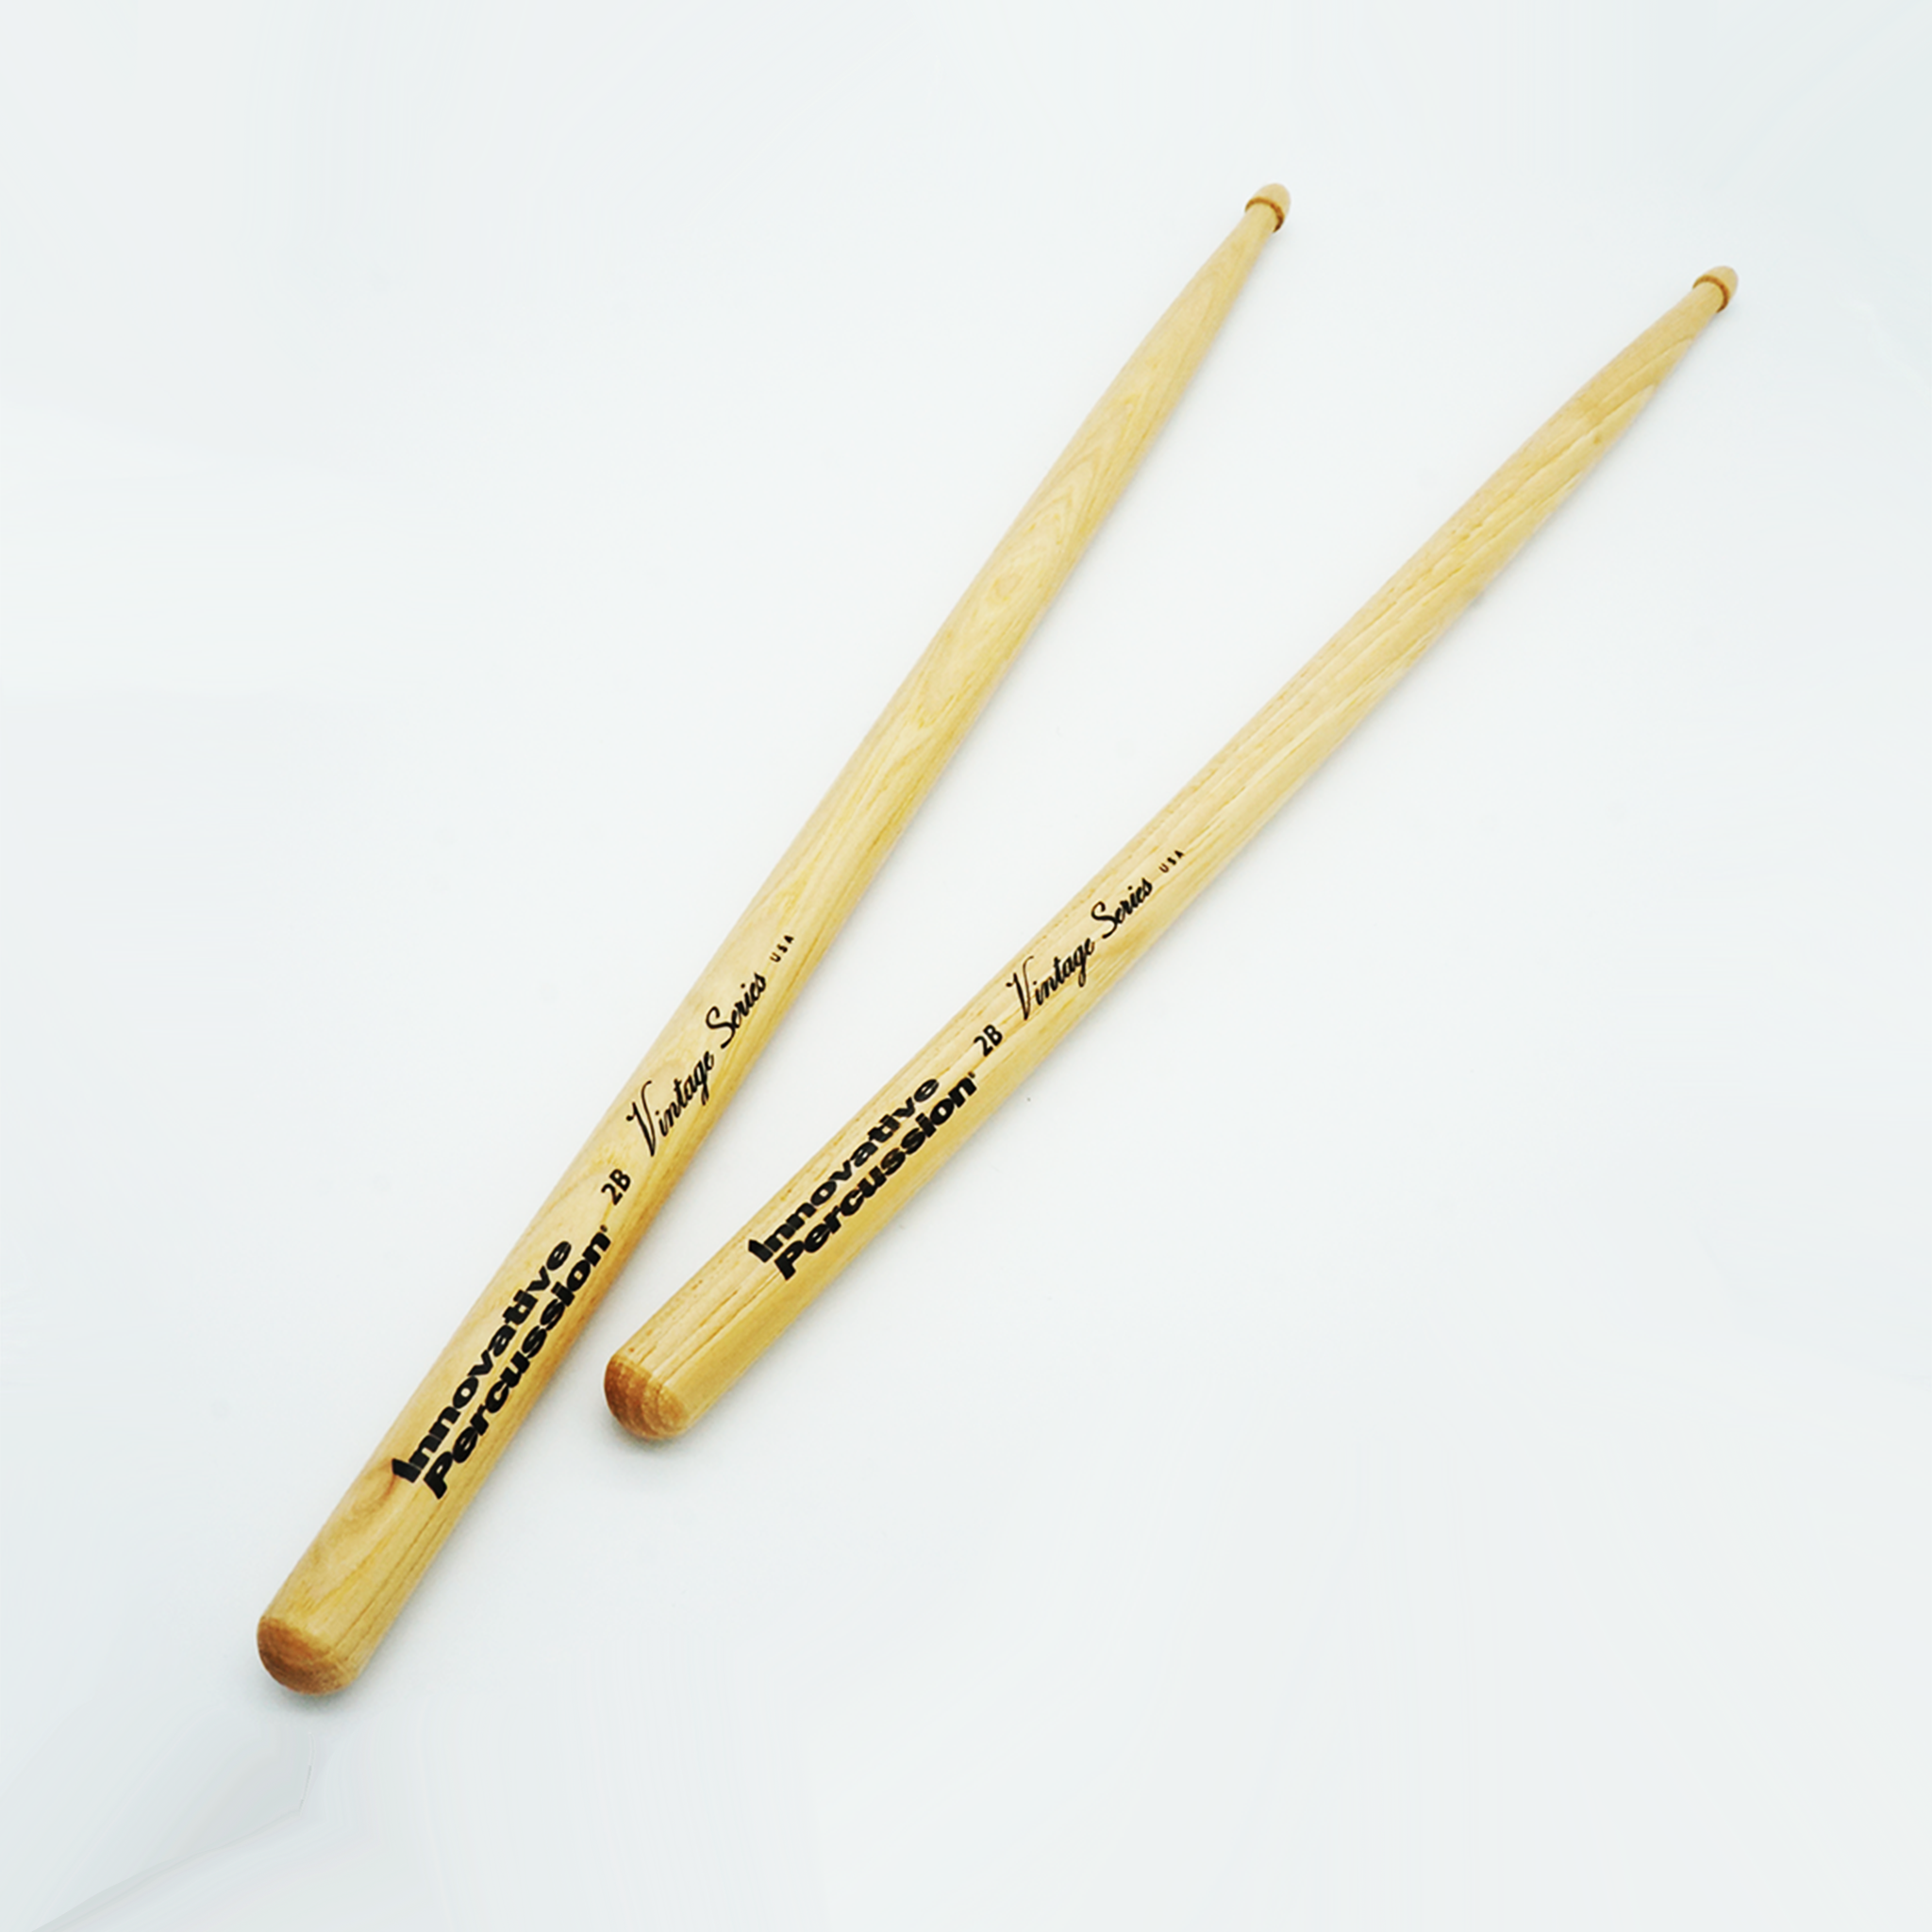 Innovative Percussion IP-2B Vintage Series 2B Drumsticks